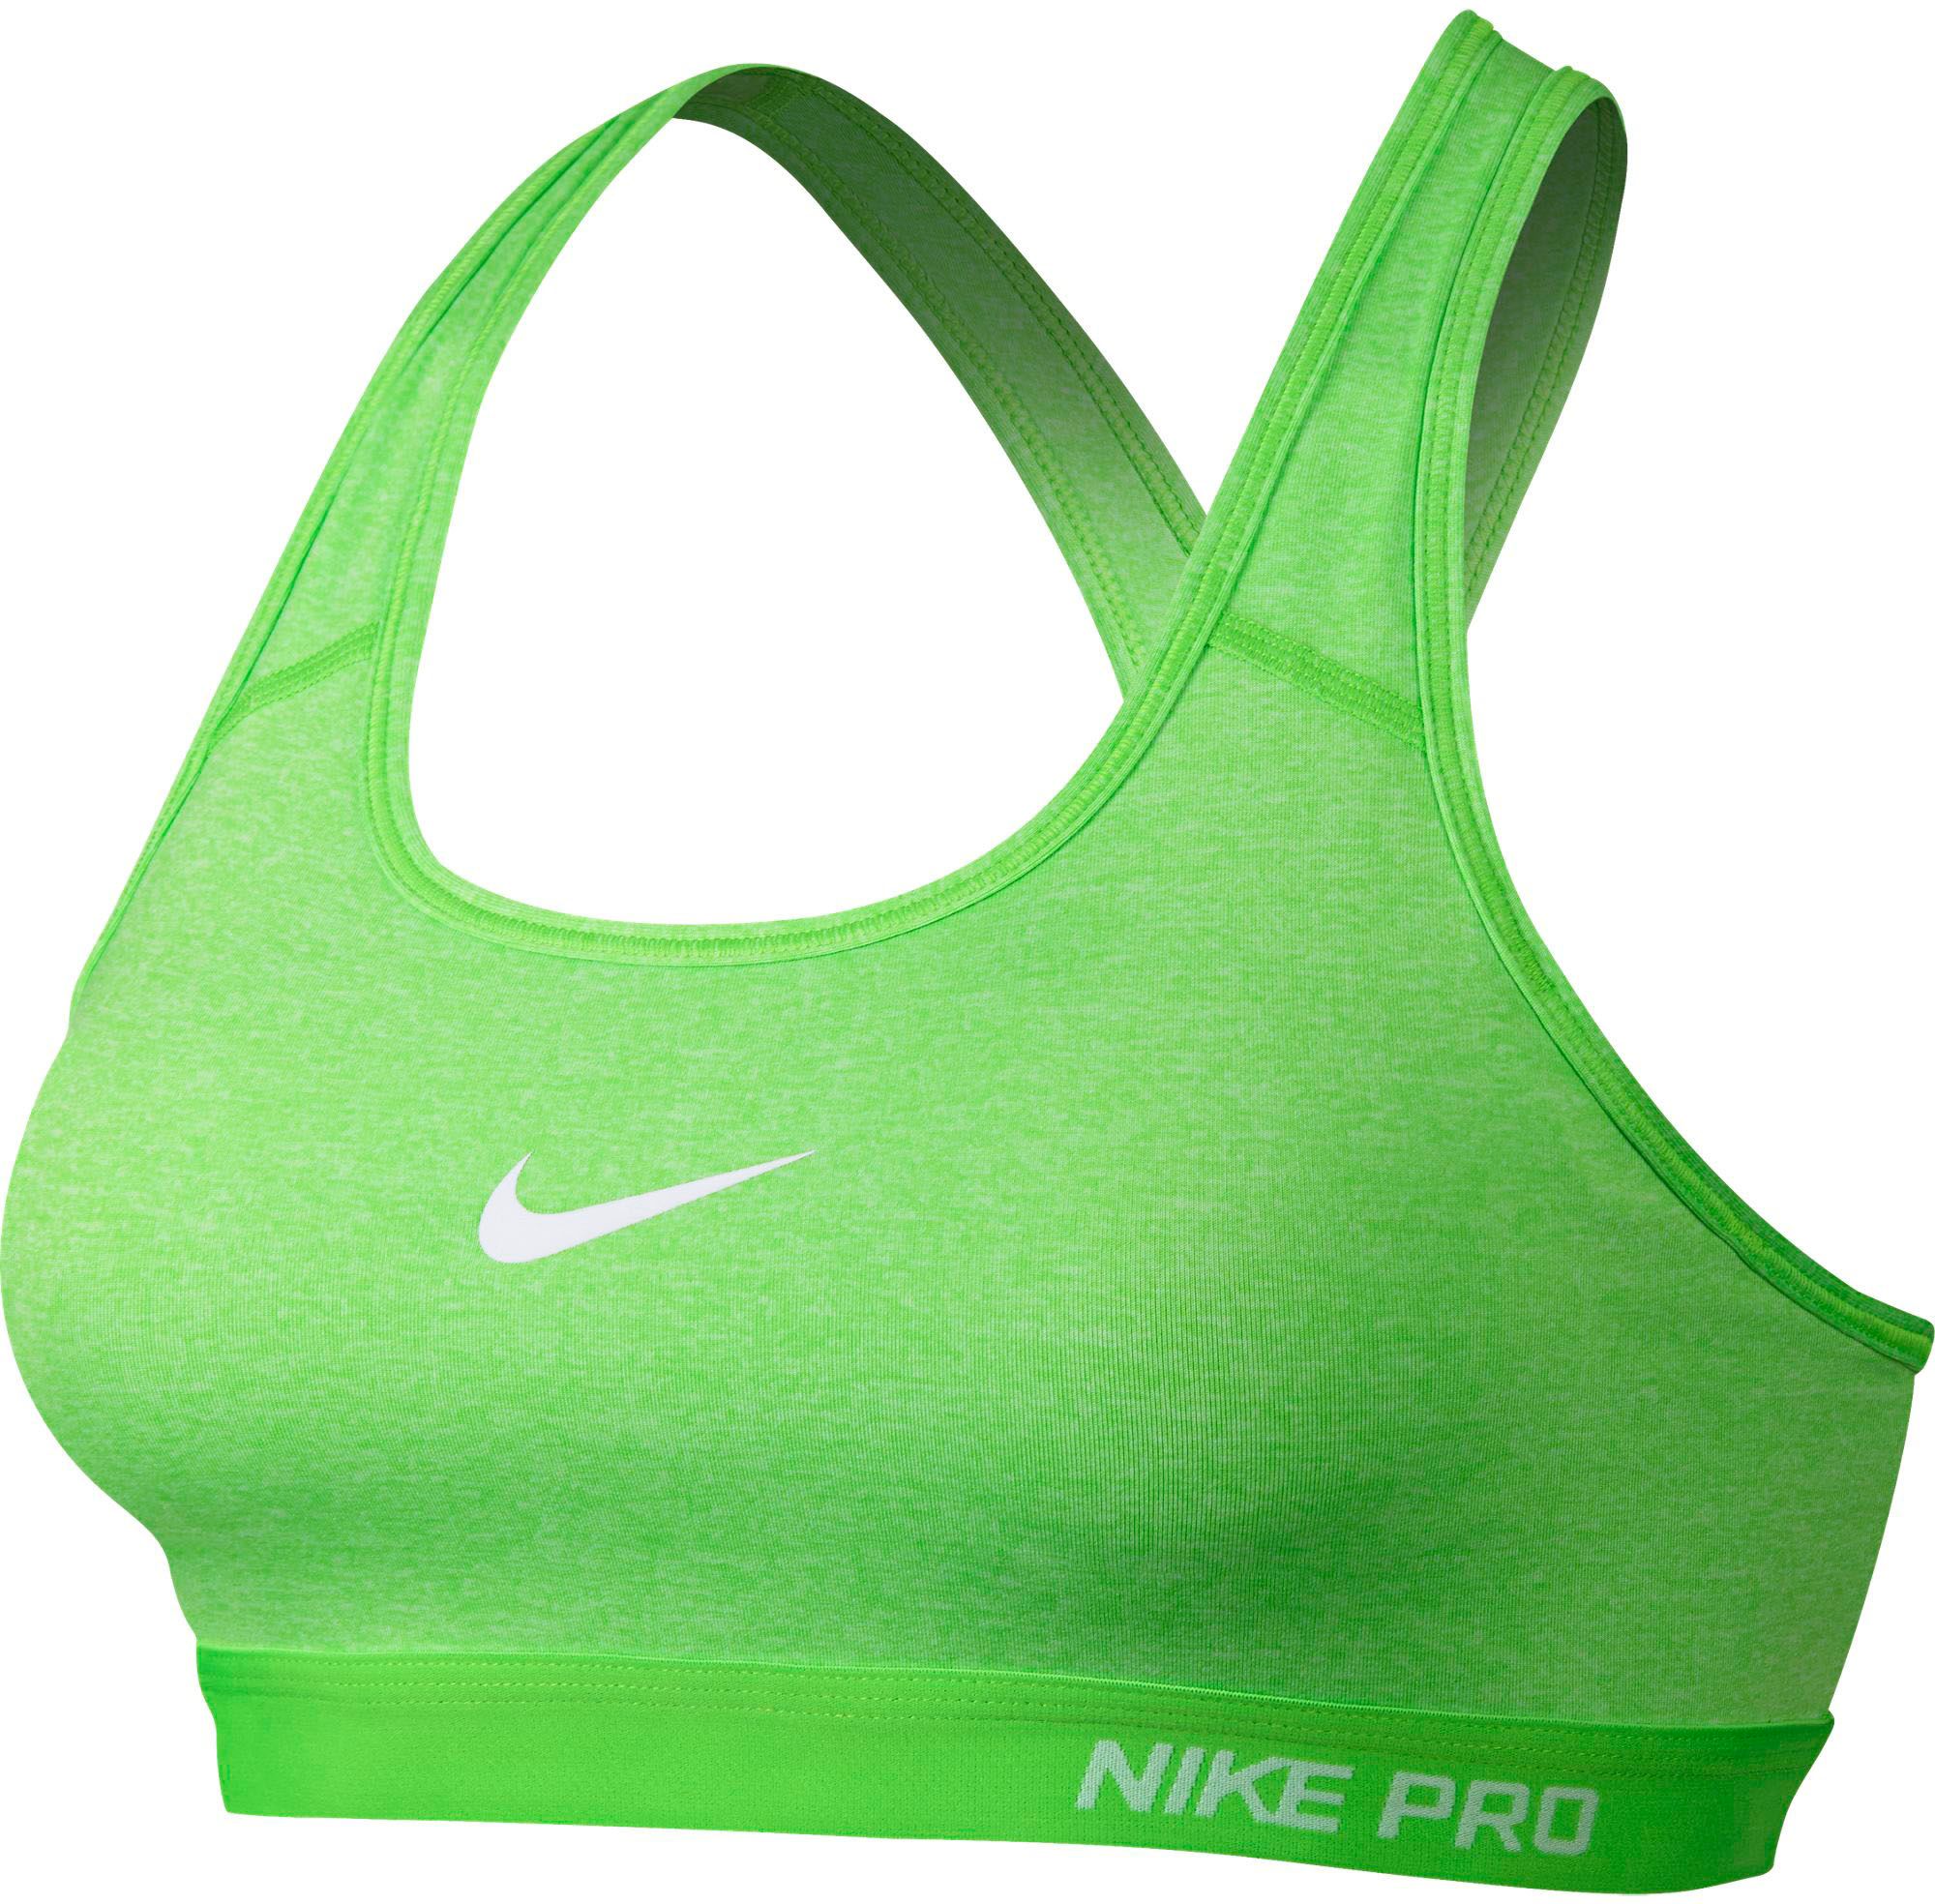 Nike Women's Pro Padded Sports Bra| DICK'S Sporting Goods